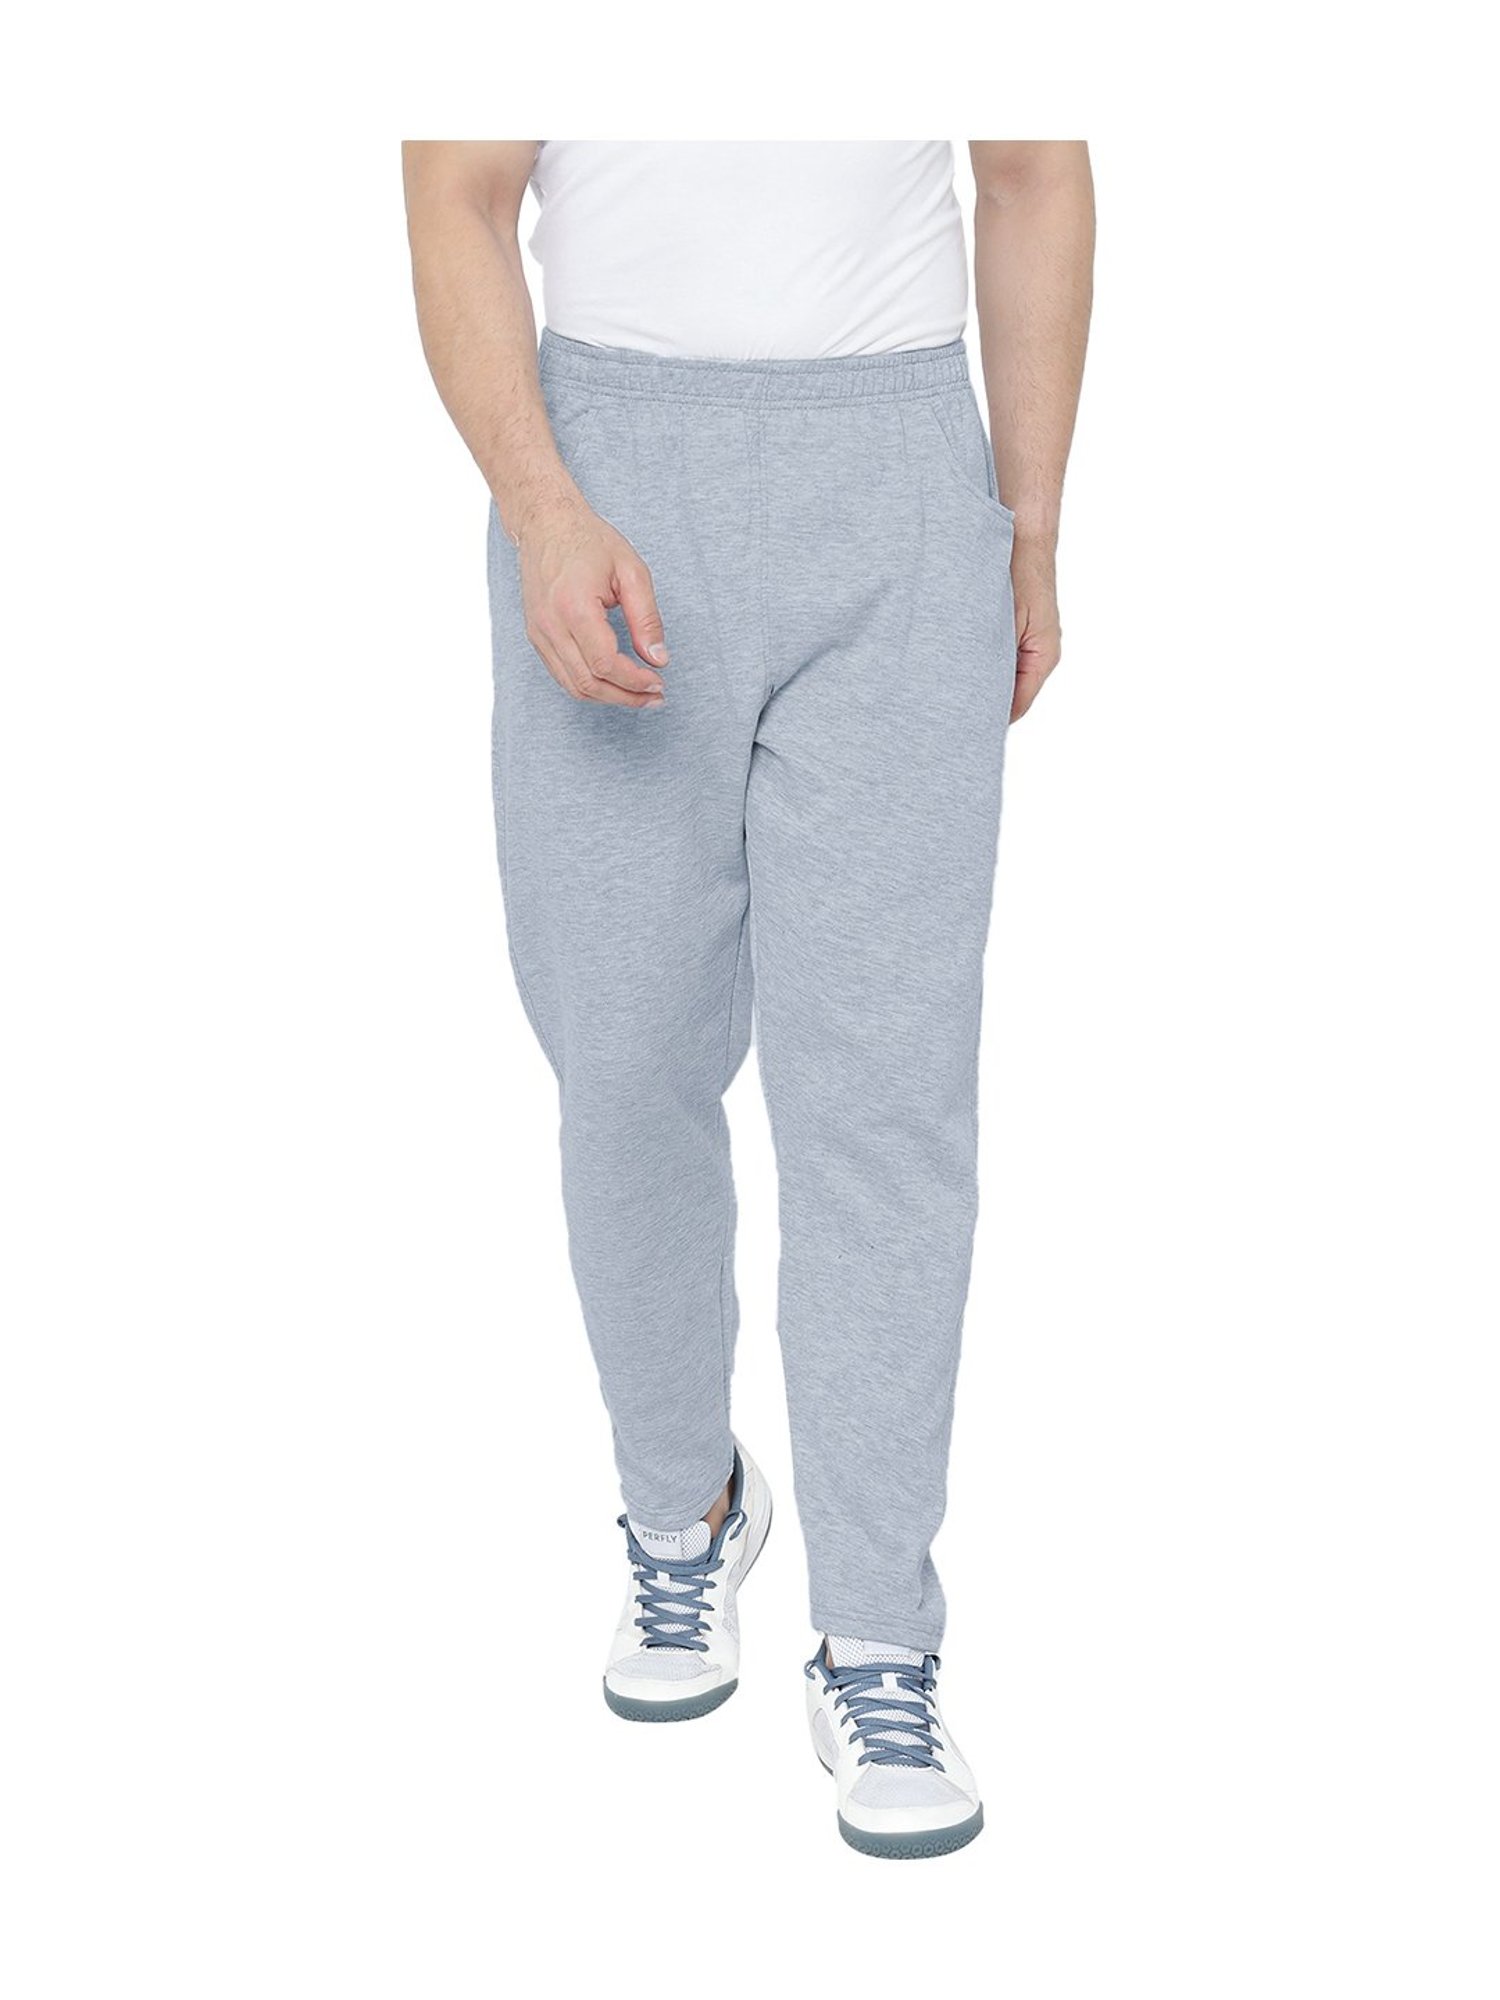 Fabulous Light Grey 4Way Lycra Solid Regular Track Pants For Men